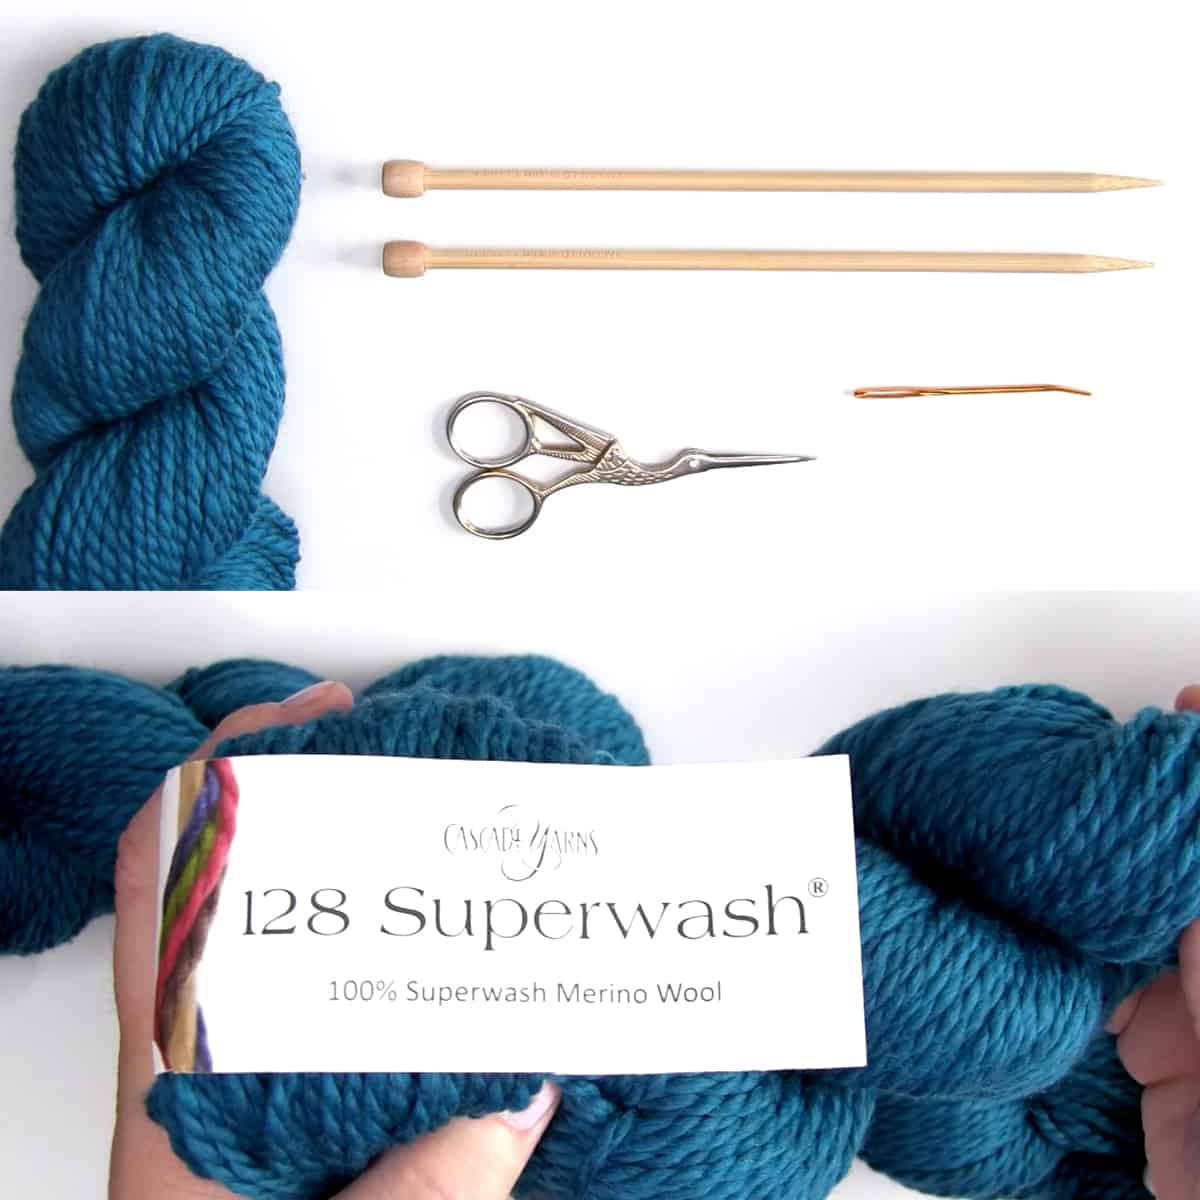 Knitting supplies of straight needles, tapestry needle, scissors, and blue 128 superwash merino wool yarn by Cascade.